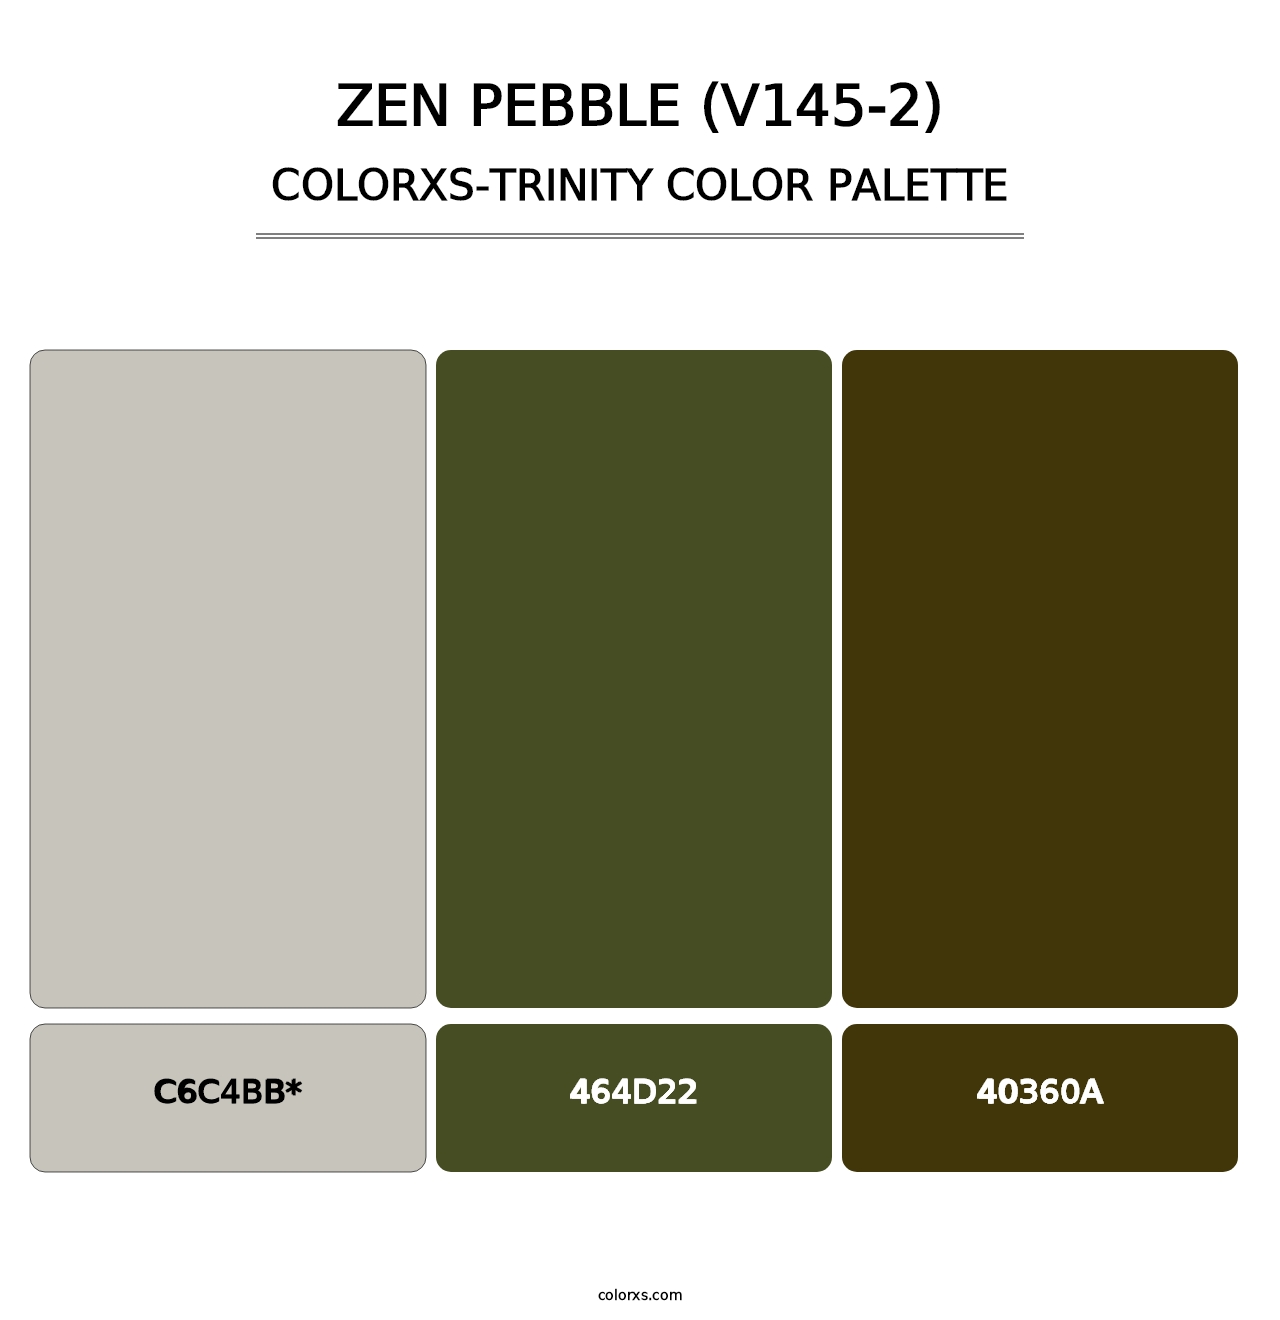 Zen Pebble (V145-2) - Colorxs Trinity Palette